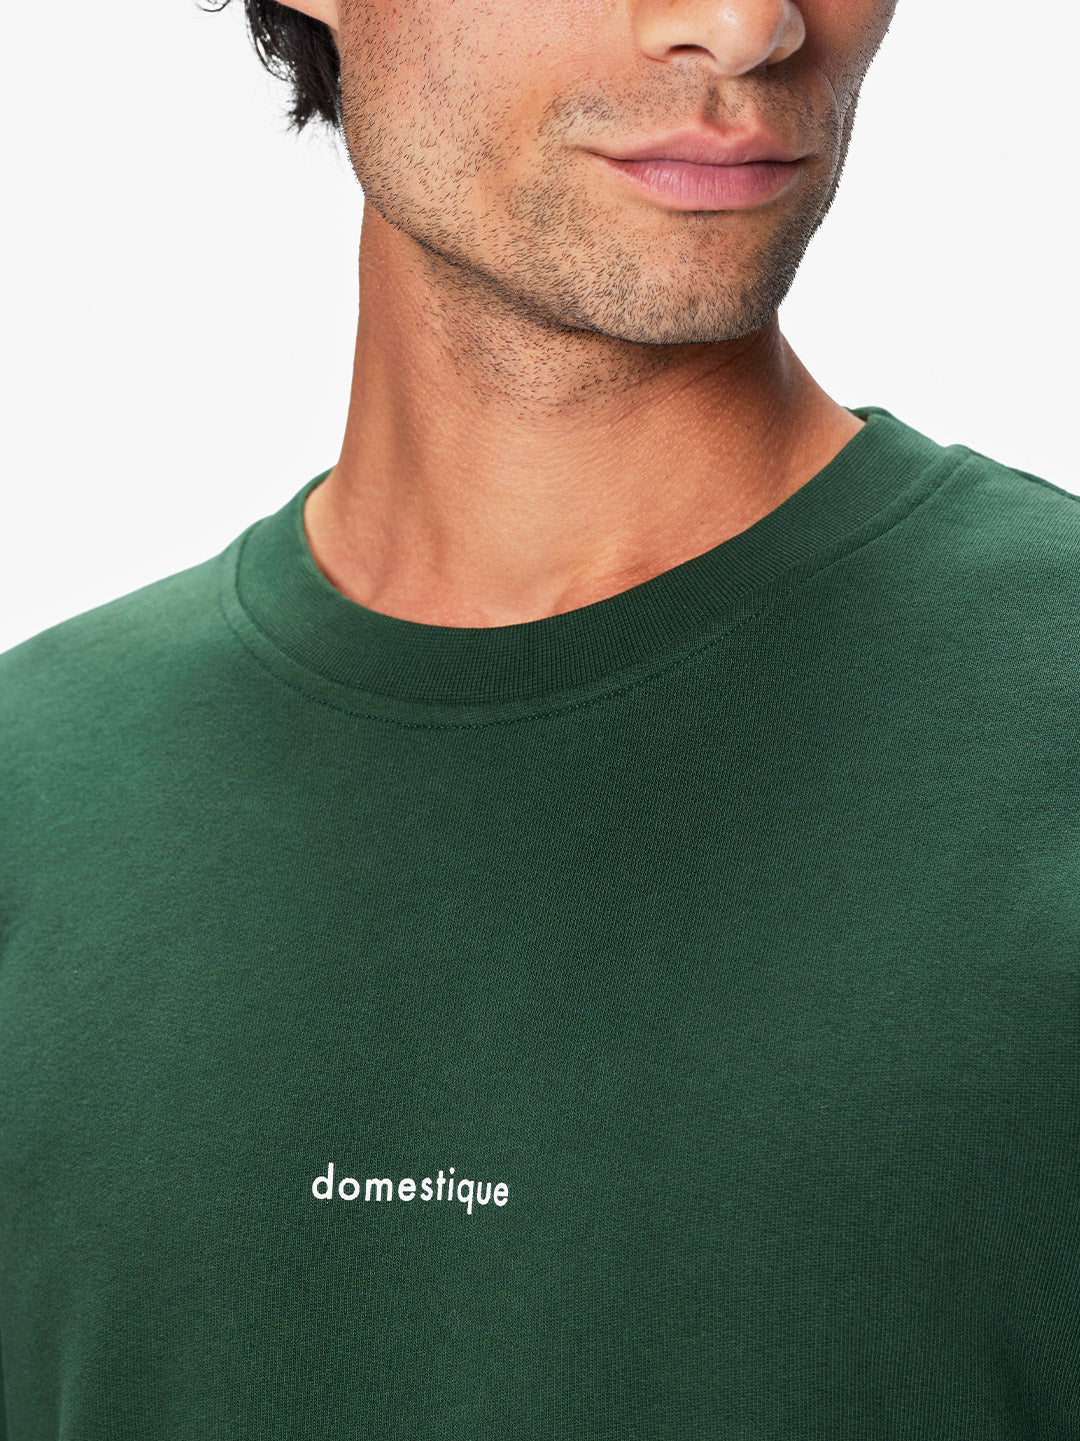 Domestique - Sweatshirt